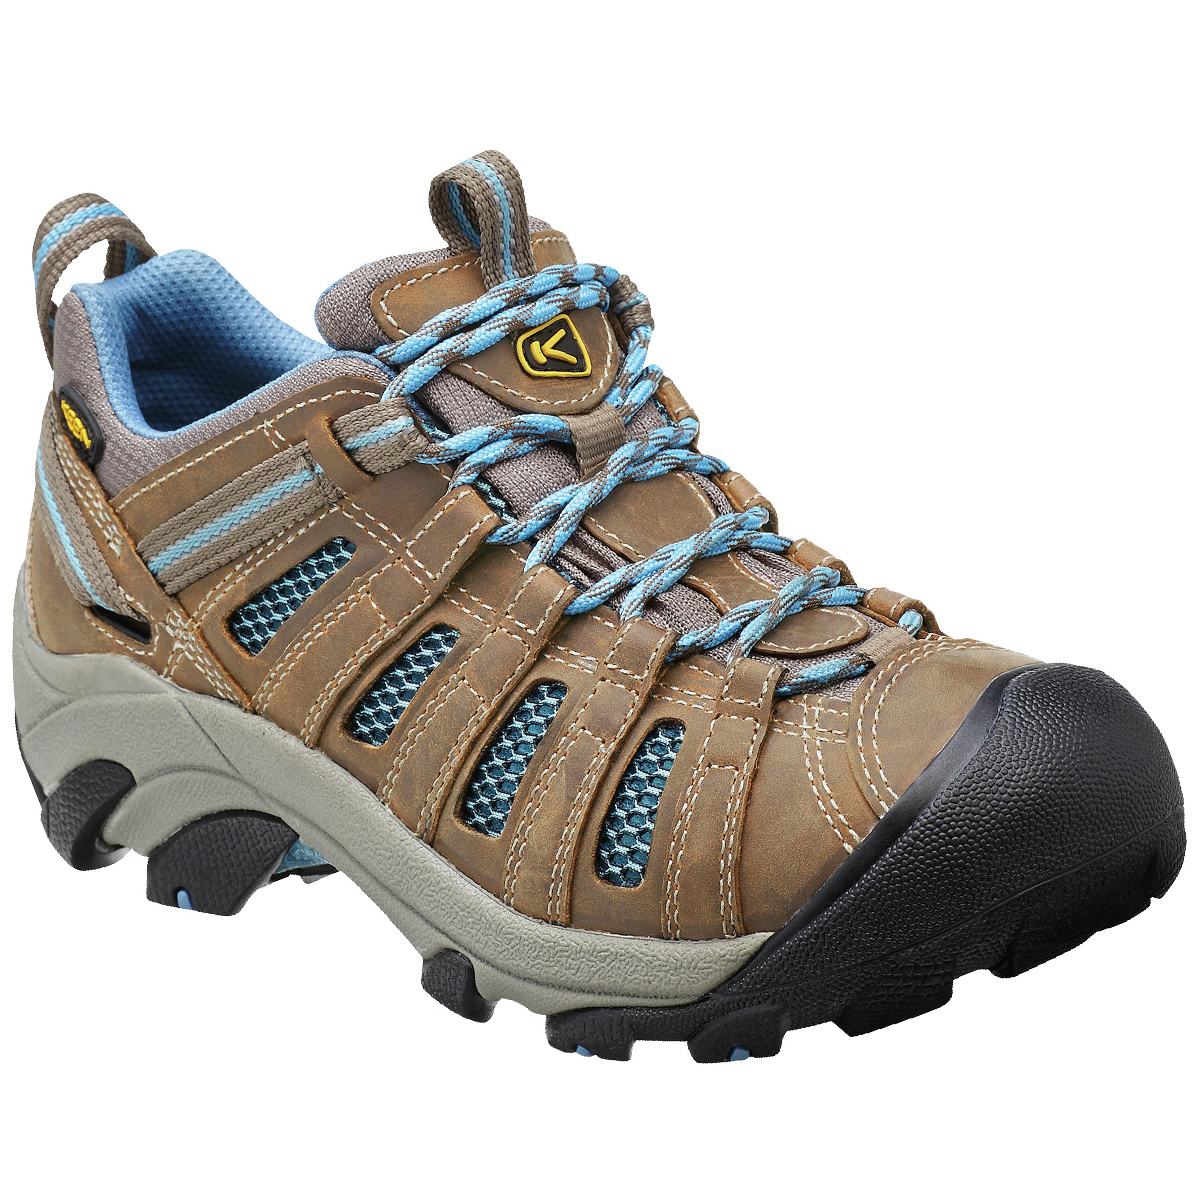 Keen Women's Voyageur Hiking Shoes - Size 6.5